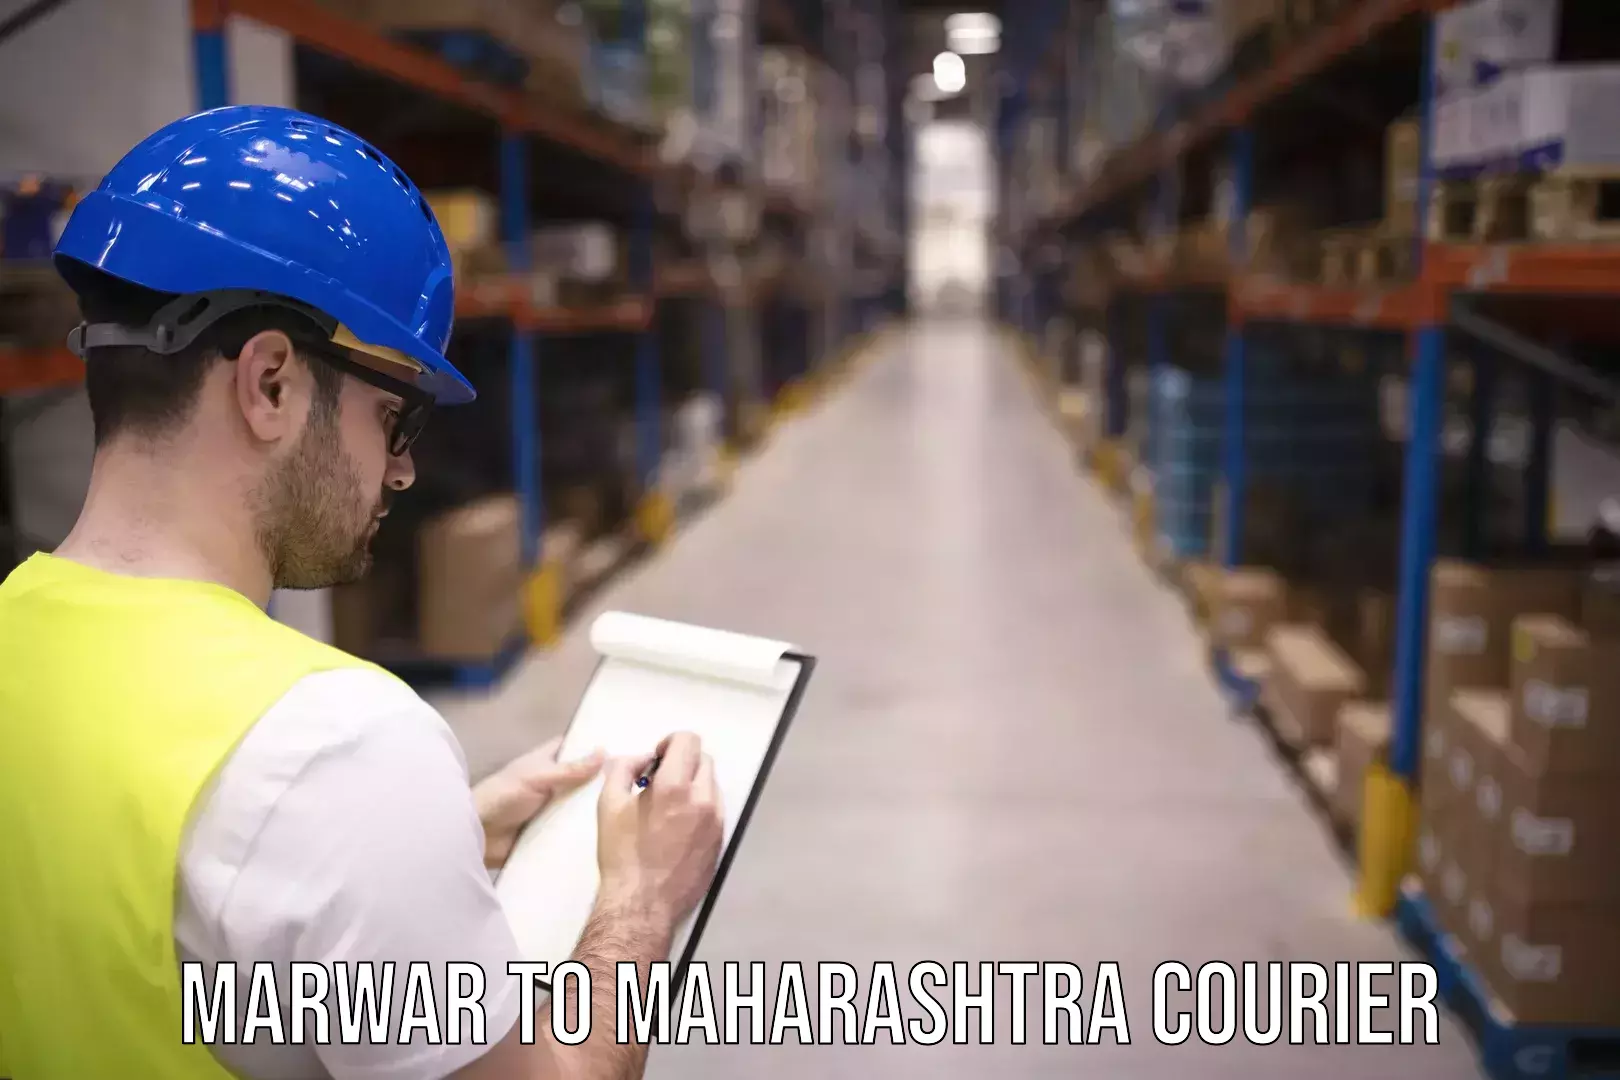 Courier service innovation Marwar to Borivali